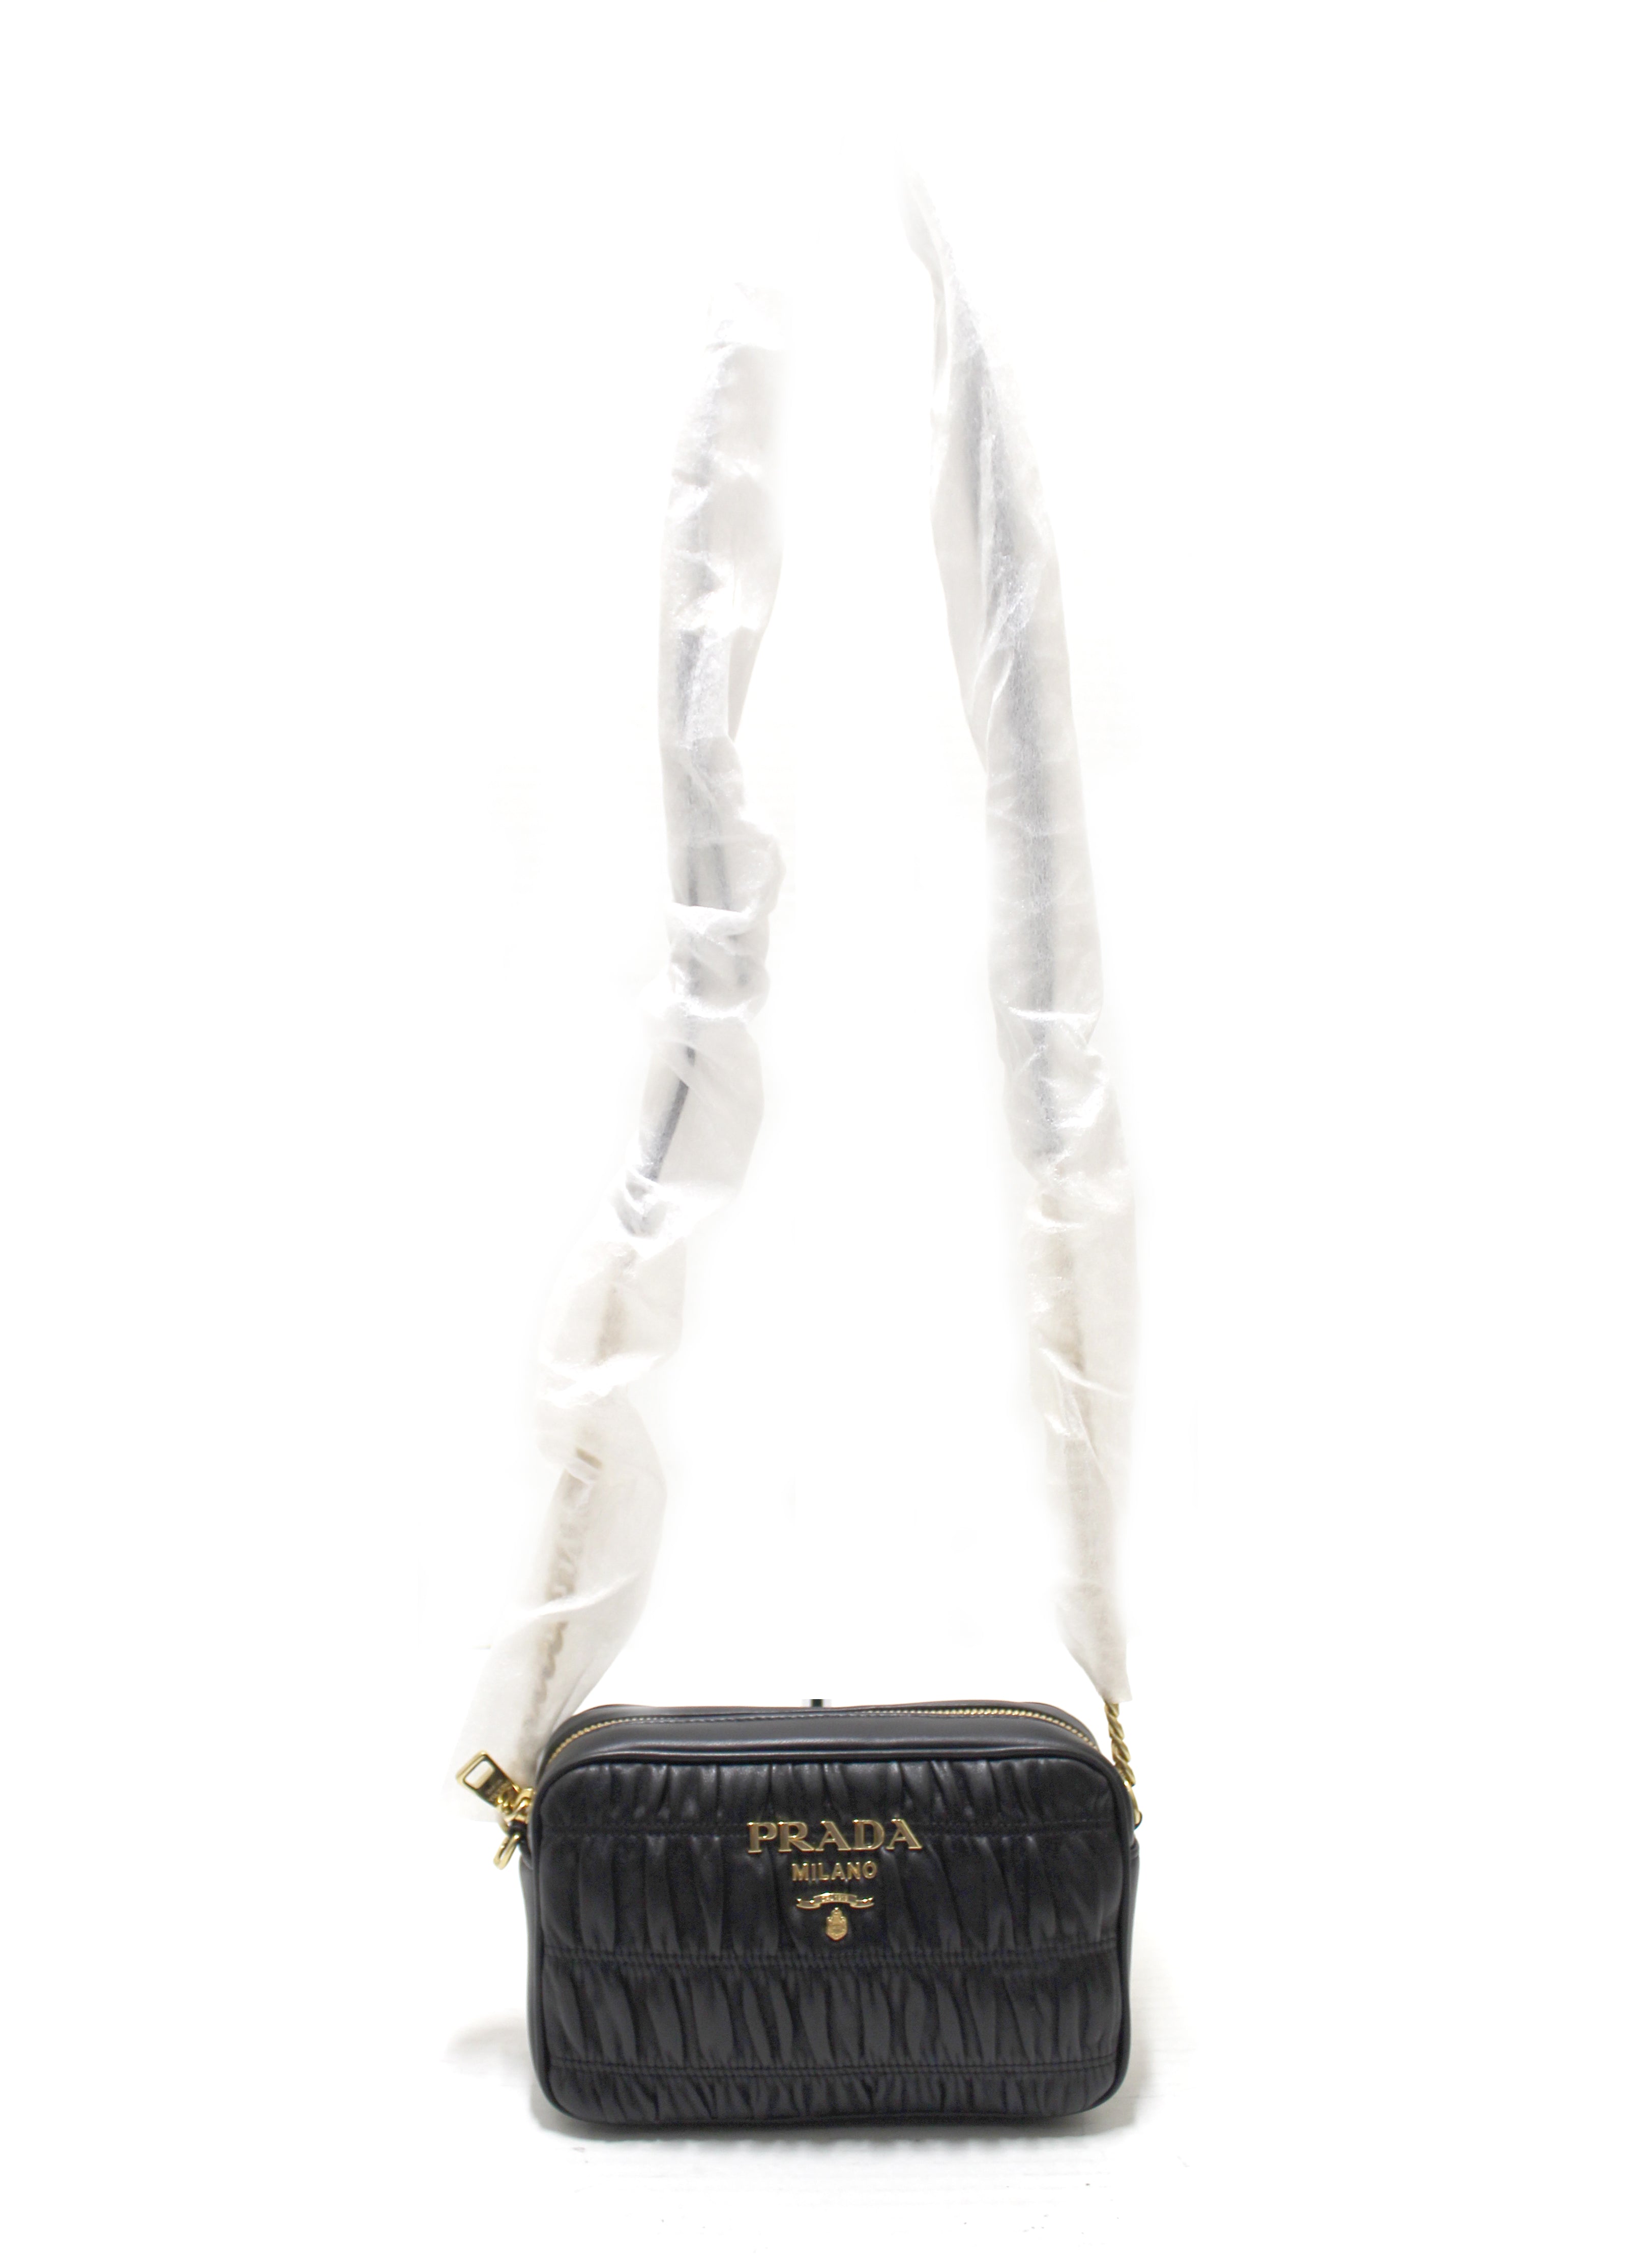 Prada Black Leather Bandoliera Shoulder Bag Prada